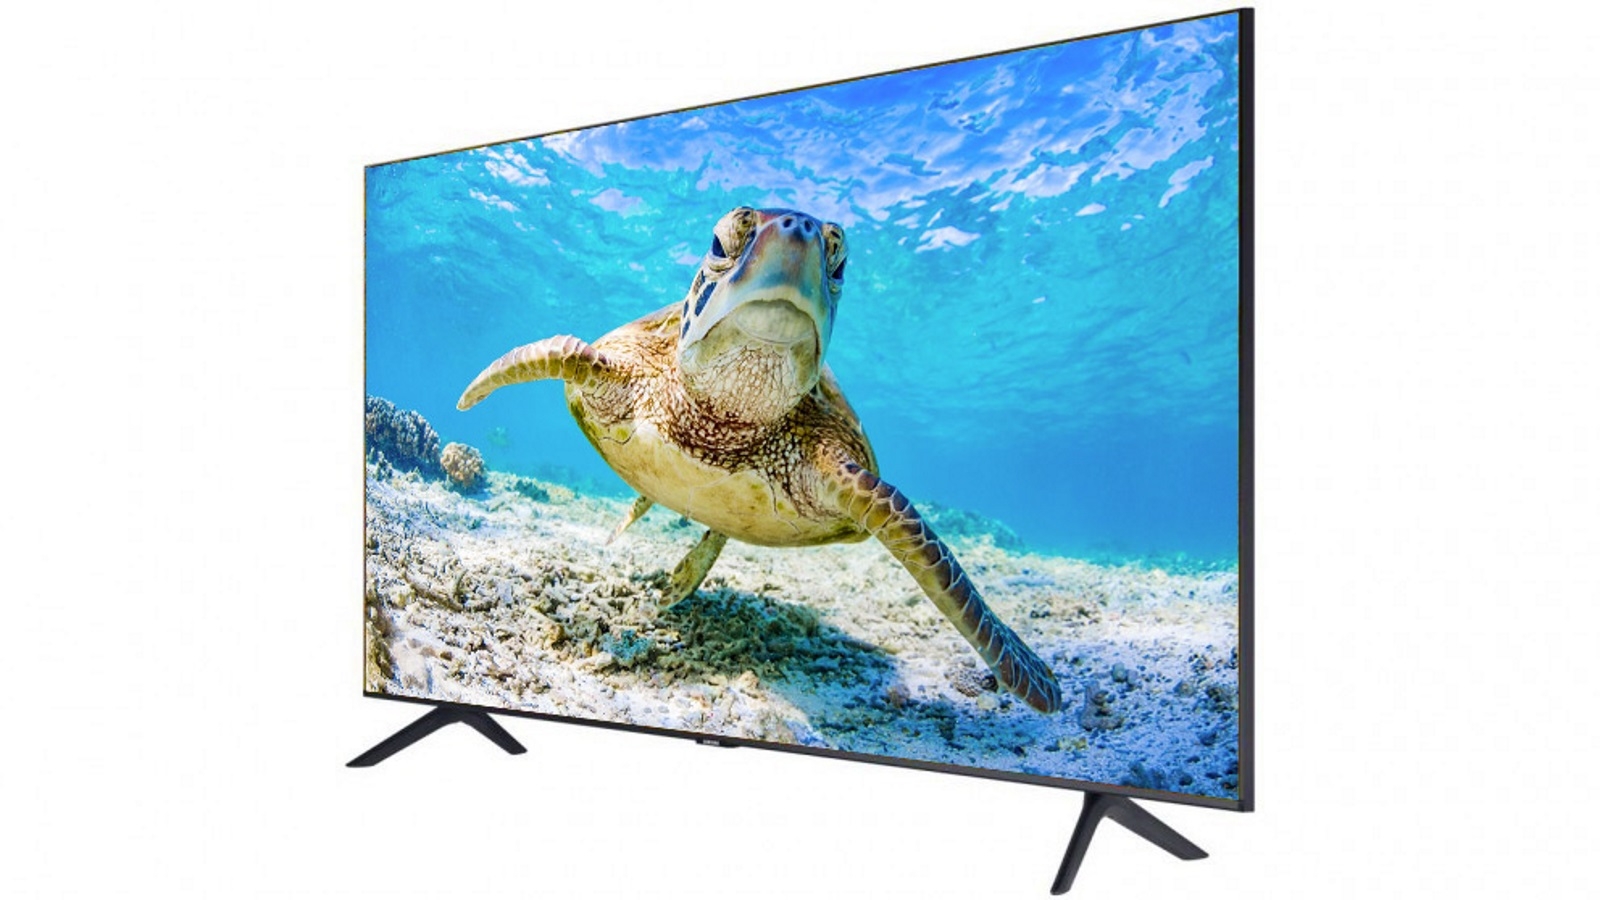 47+ Samsung tu8000 43 crystal uhd 4k smart tv 2020 dimensions ideas in 2021 